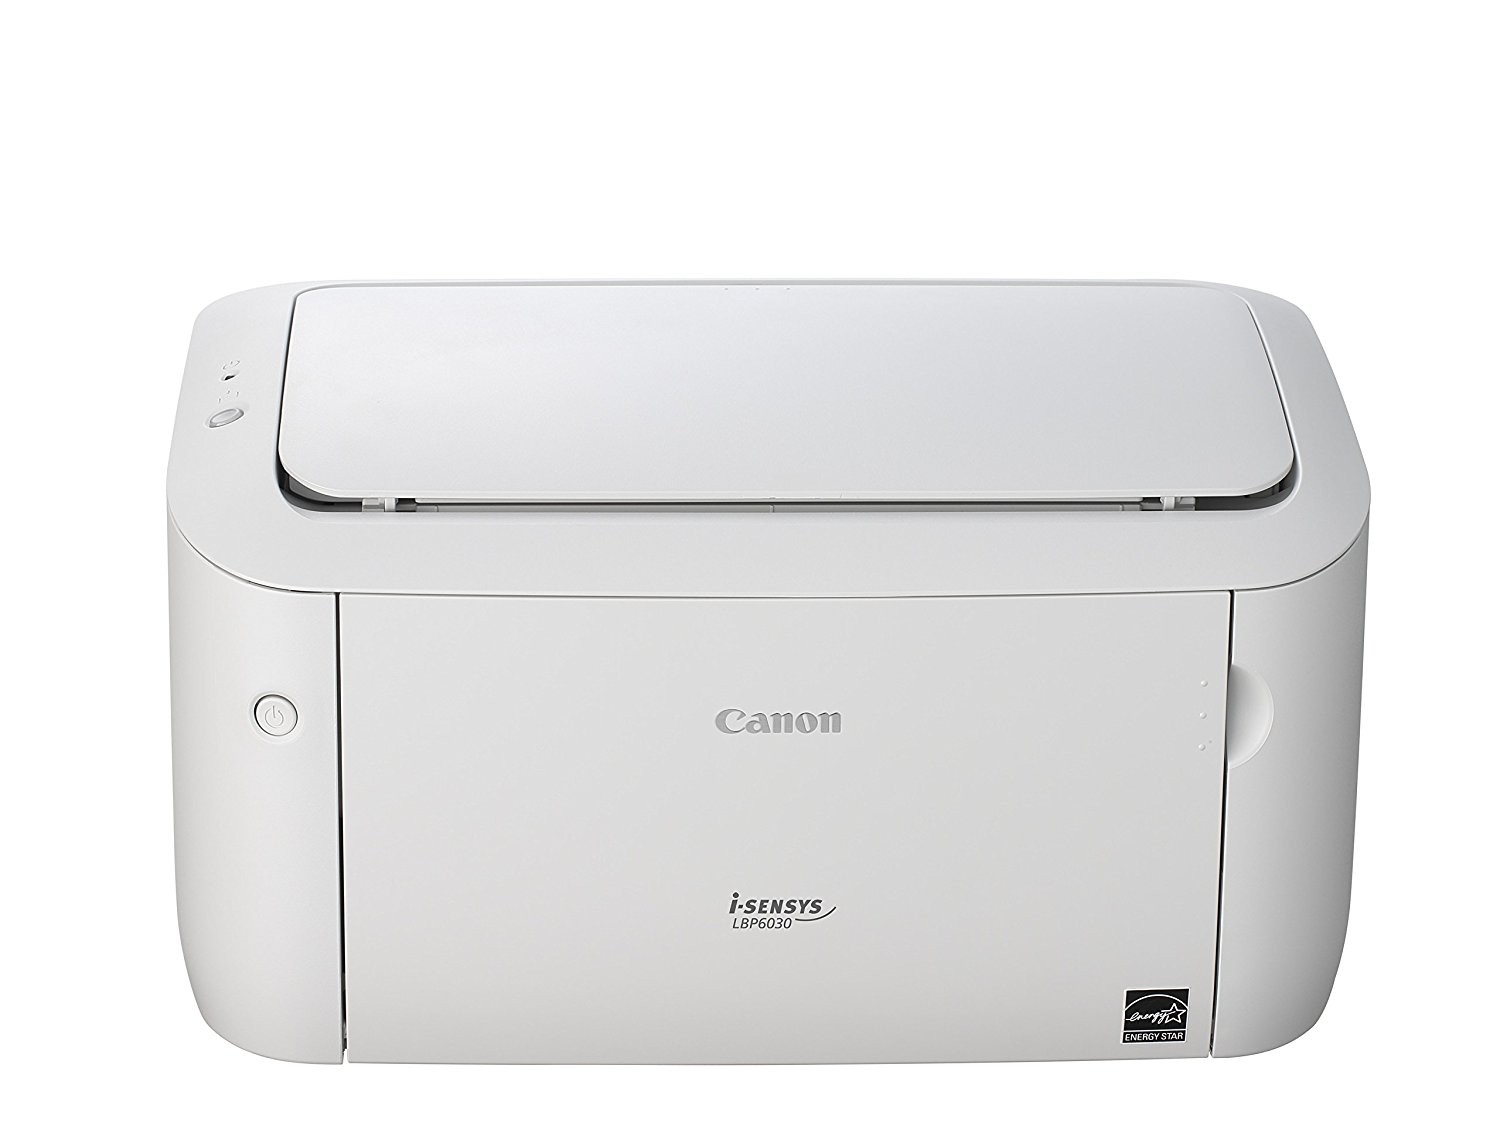 Драйвер для принтера canon l11121e. Принтер Canon i-SENSYS lbp6030. Лазерный принтер Canon lbp6000. Canon LBP 6020. Принтер Canon i-SENSYS lbp113w.